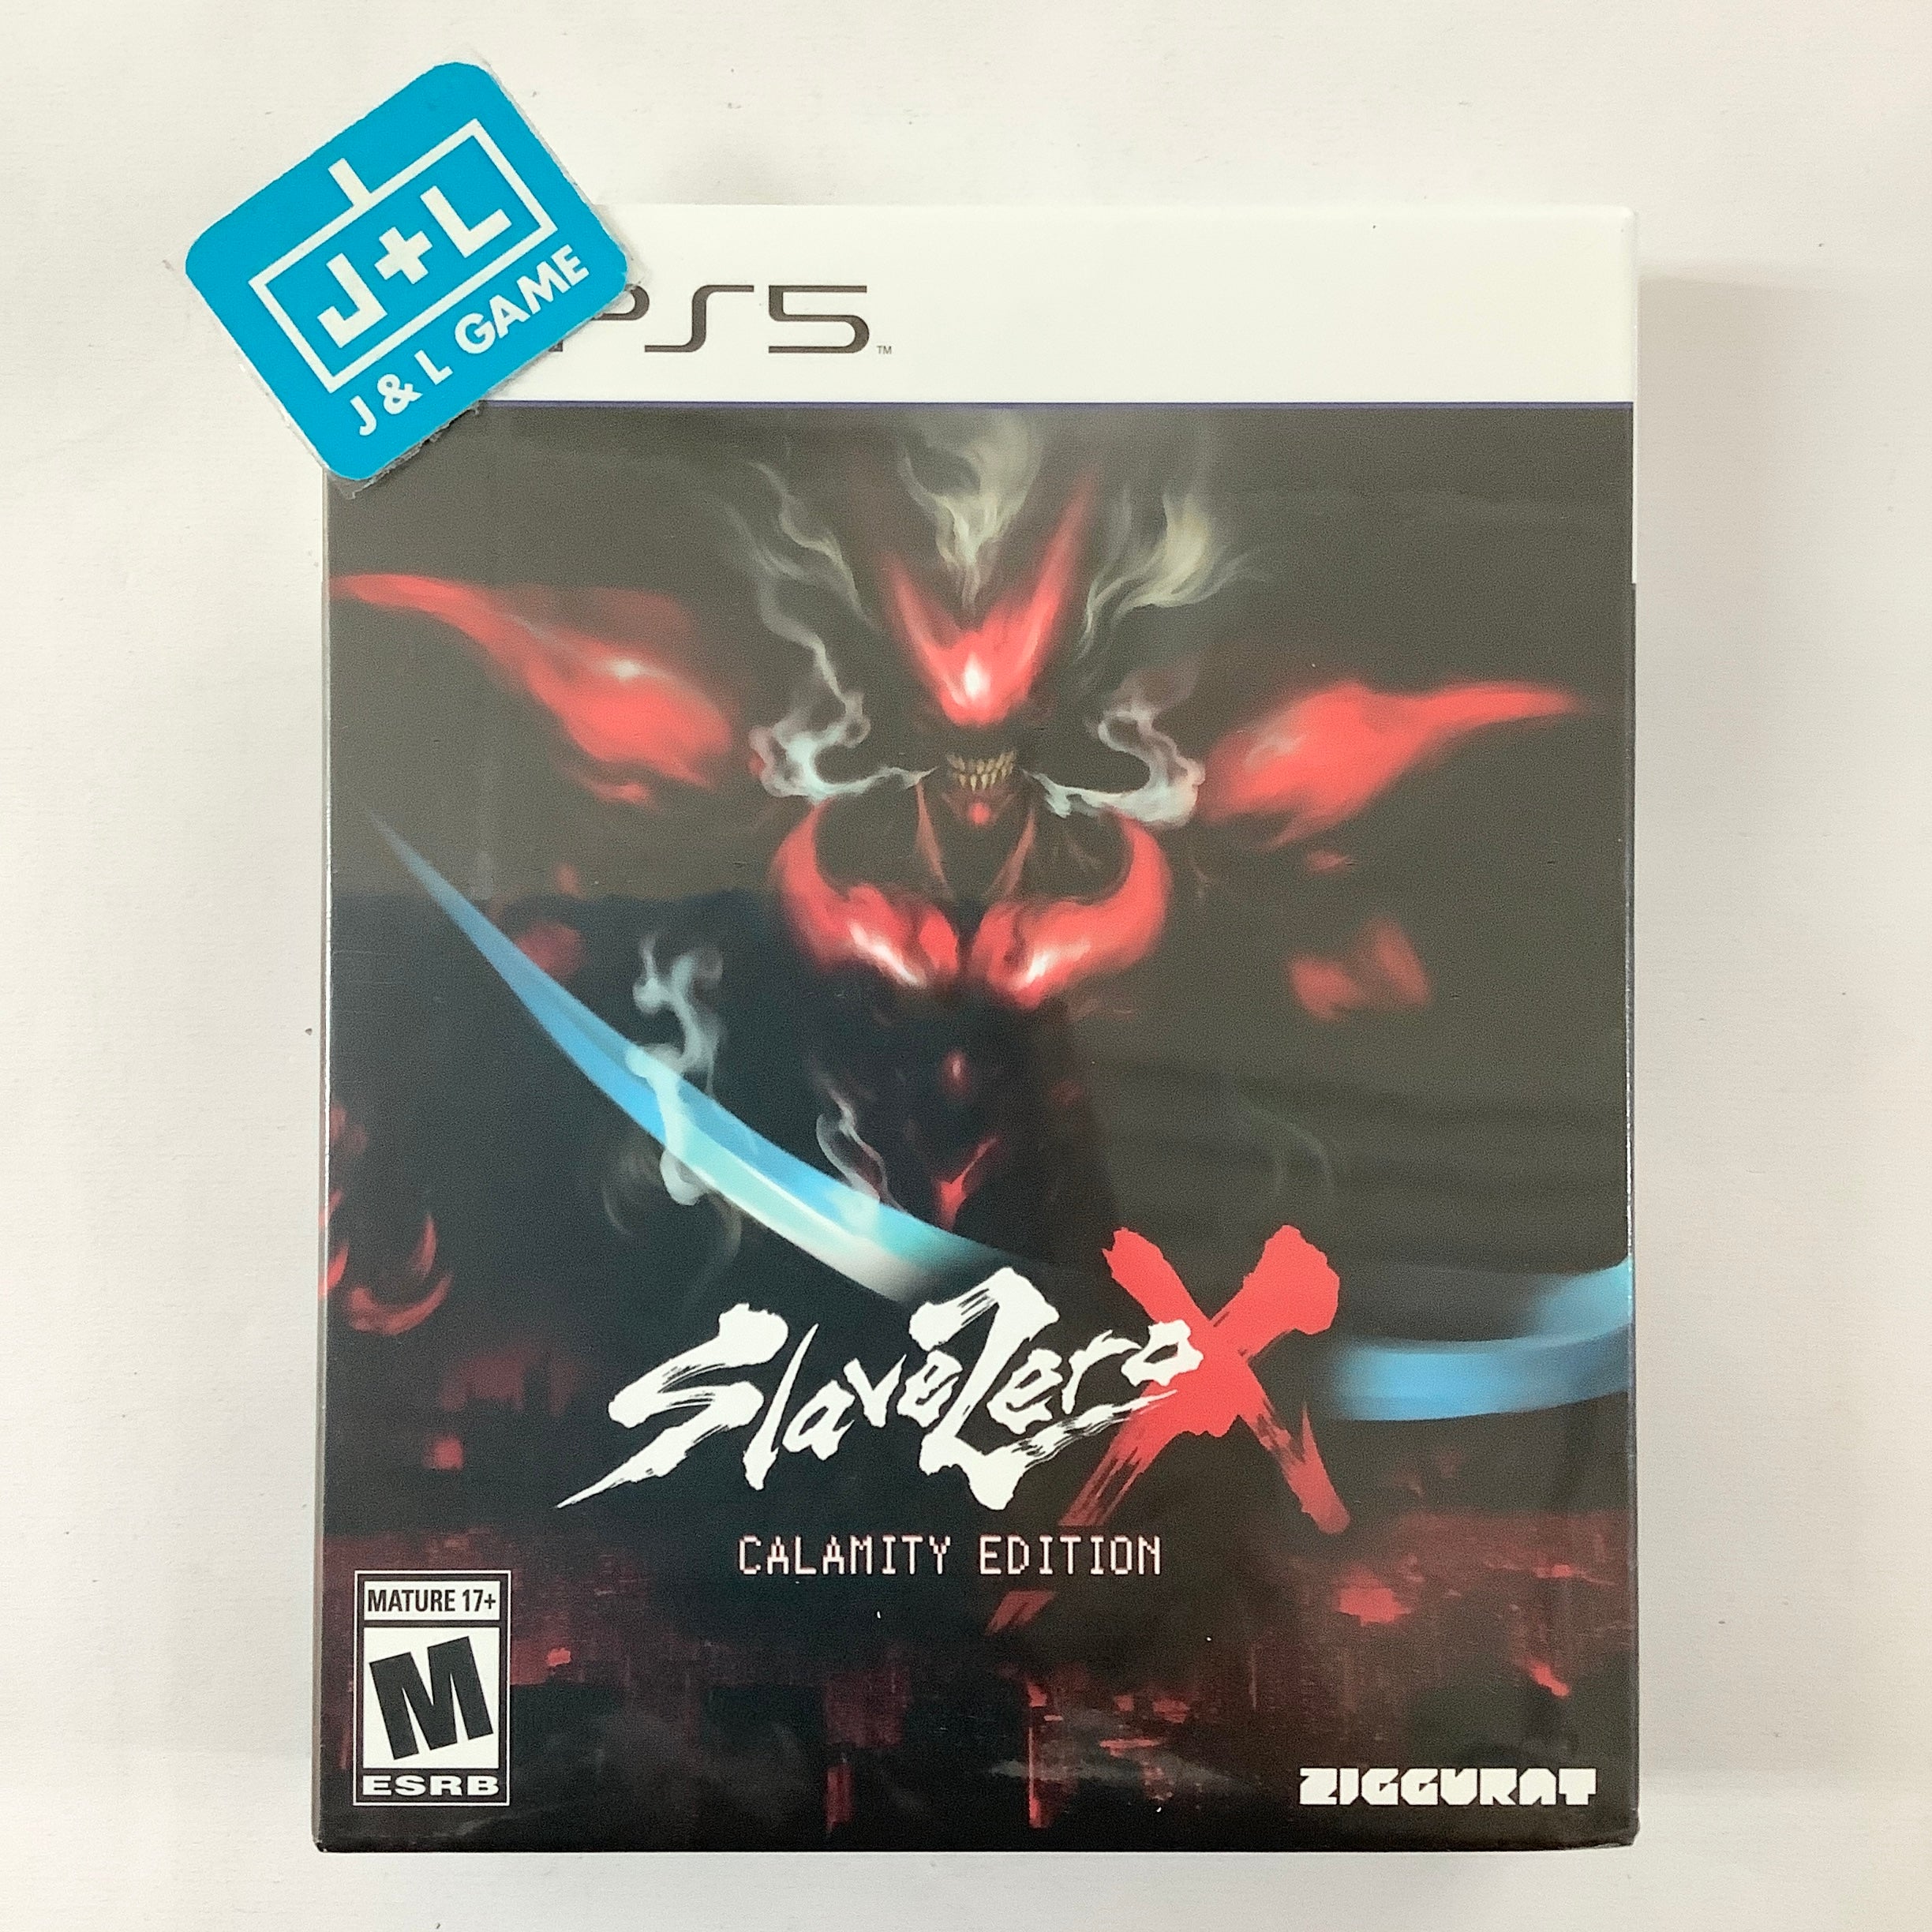 Slave Zero X (Calamity Edition) - (PS5) PlayStation 5 Video Games Ziggurat Interactive, Inc.   